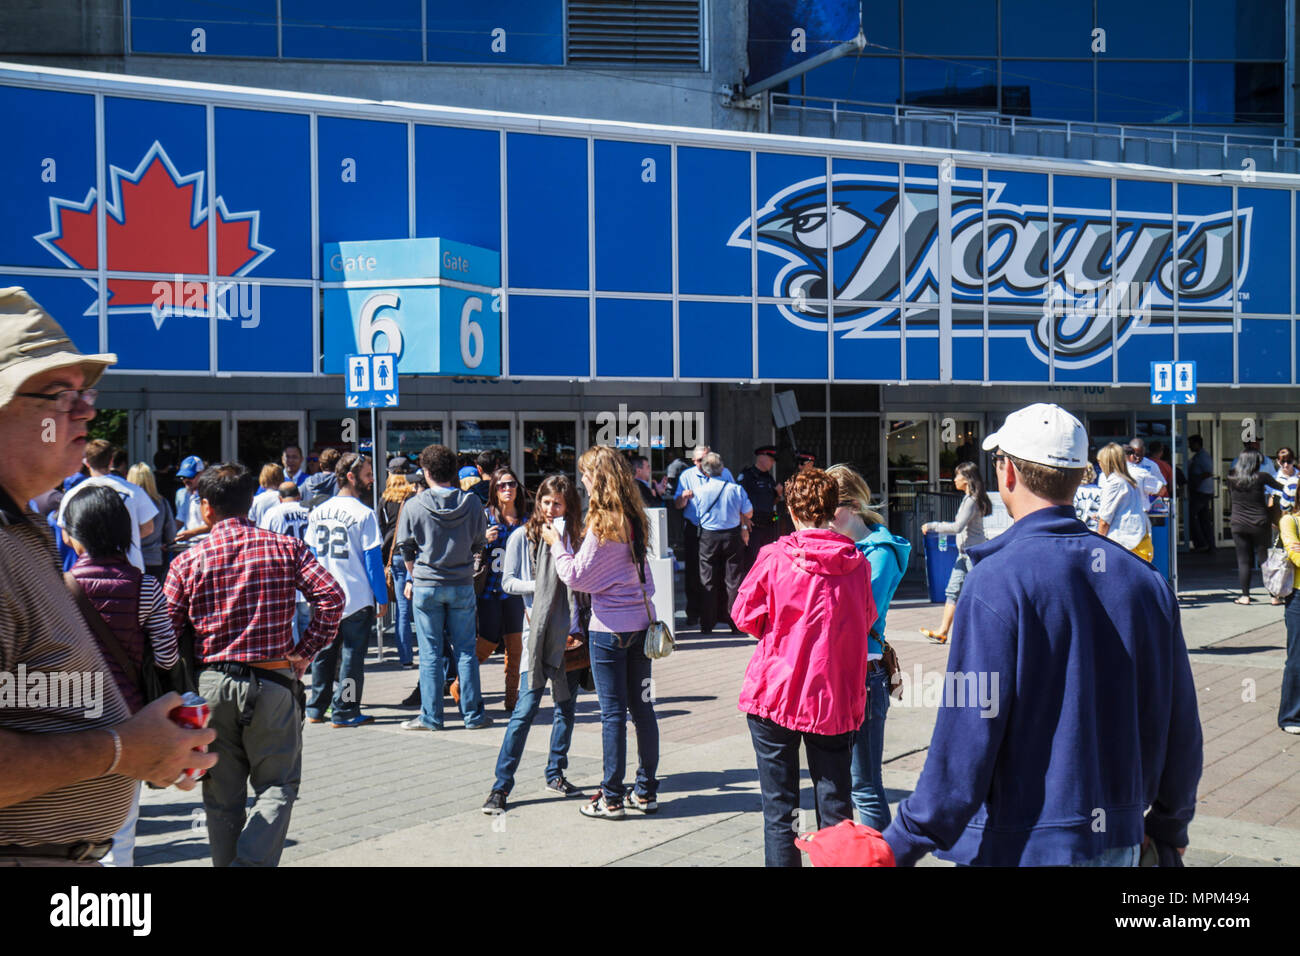 Toronto Canada,Bremner Boulevard,Rogers Centre,center,Blue Jays Major League Baseball teamal sports,outside stadium,game day,crowd,arriving fans,adult Stock Photo